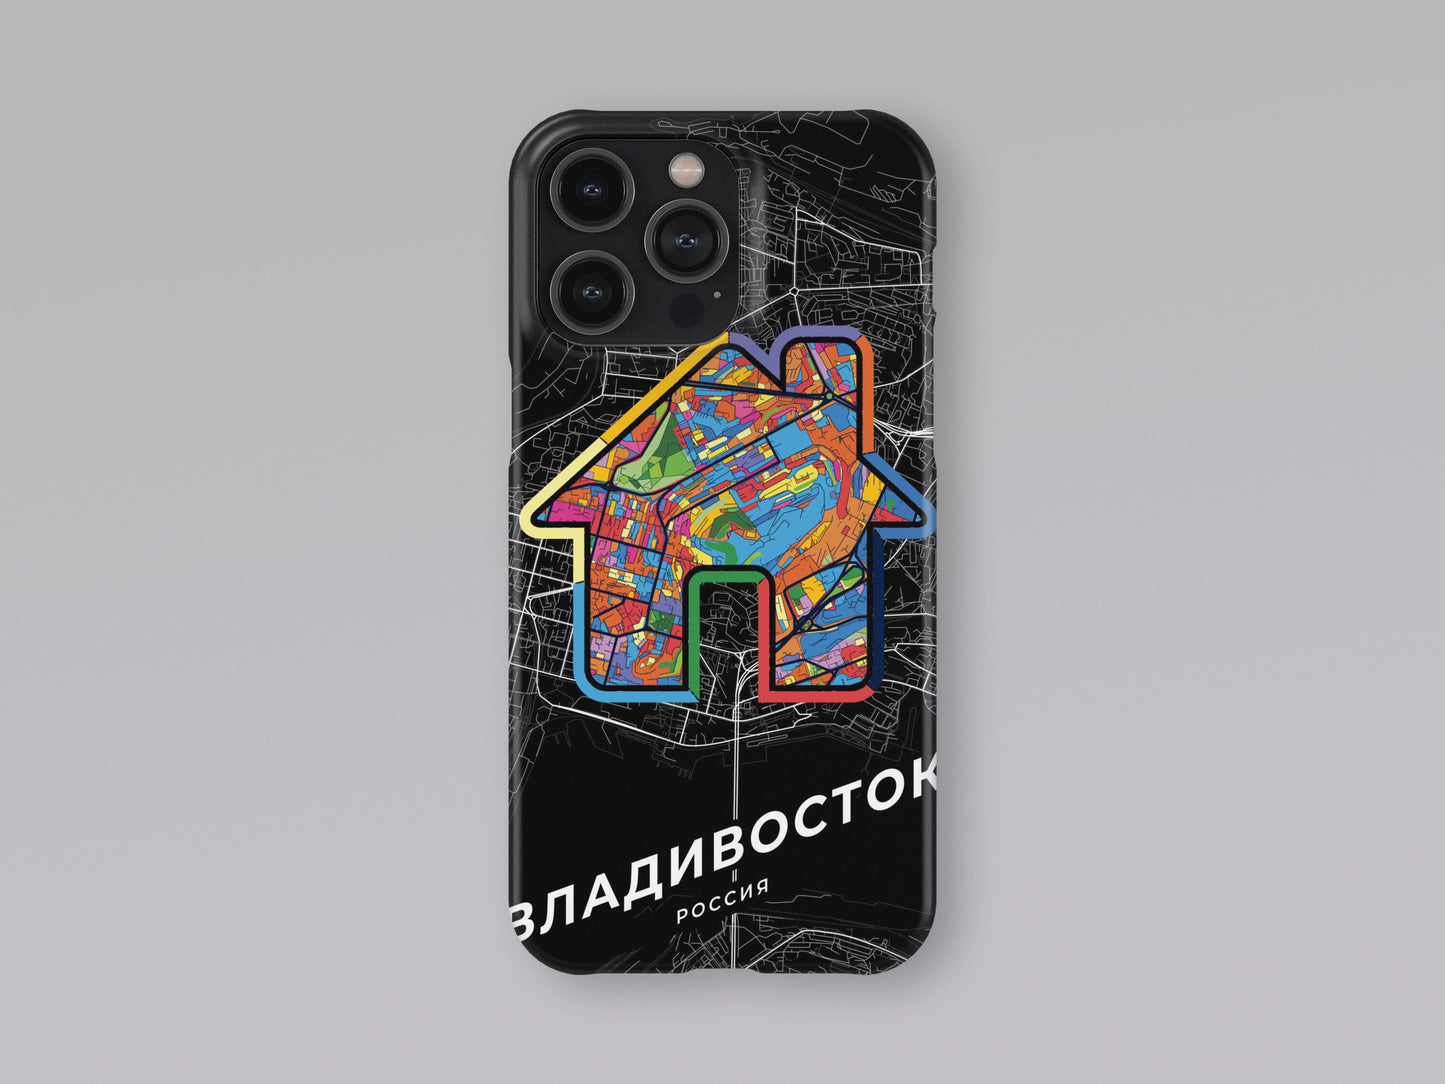 Vladivostok Russia slim phone case with colorful icon 3